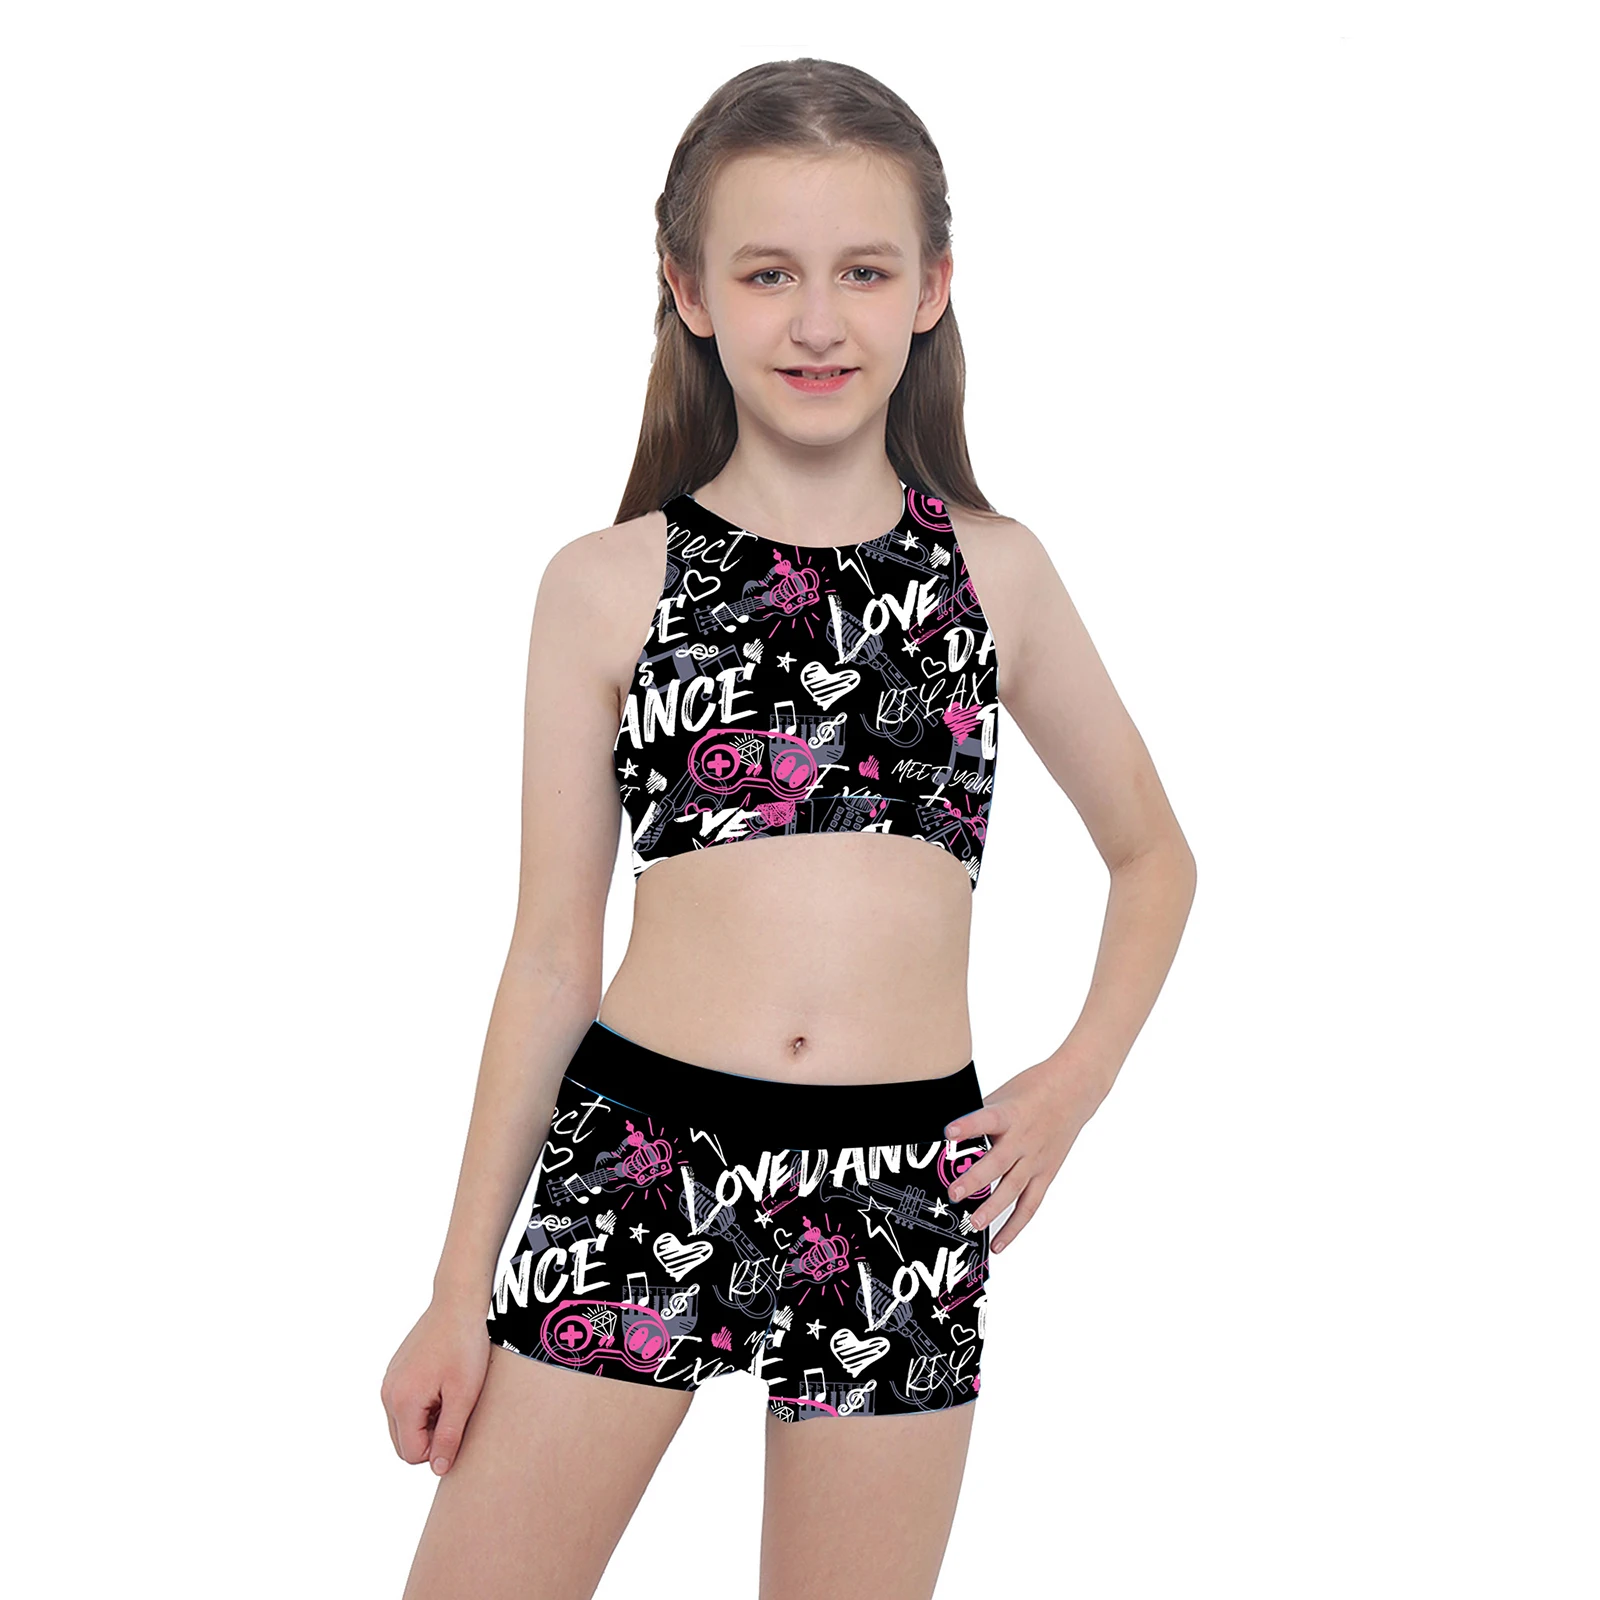 Girls Dance Bra Top Kids Yoga Gymnastics Workout Sports Vest Tanks Top Dancewear 